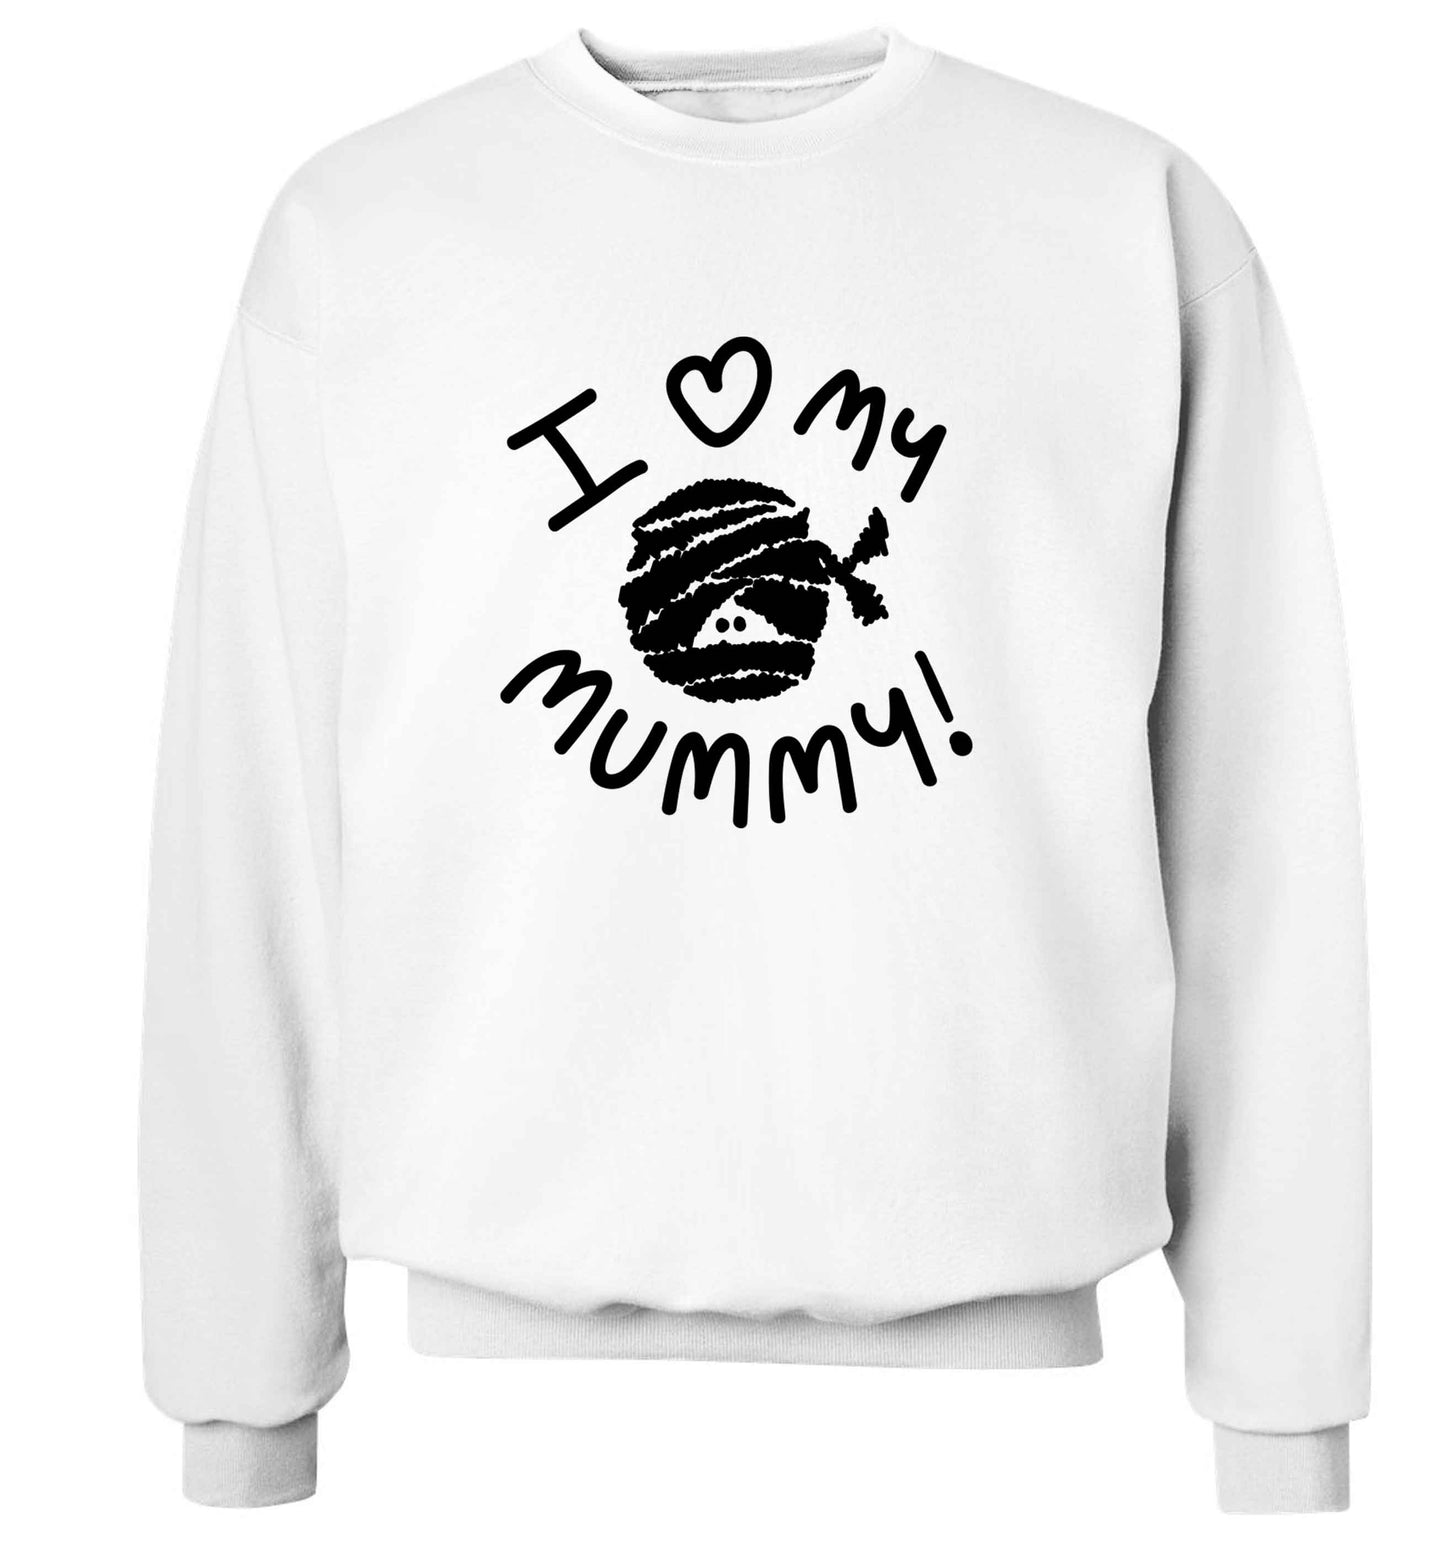 I love my mummy halloween pun adult's unisex white sweater 2XL